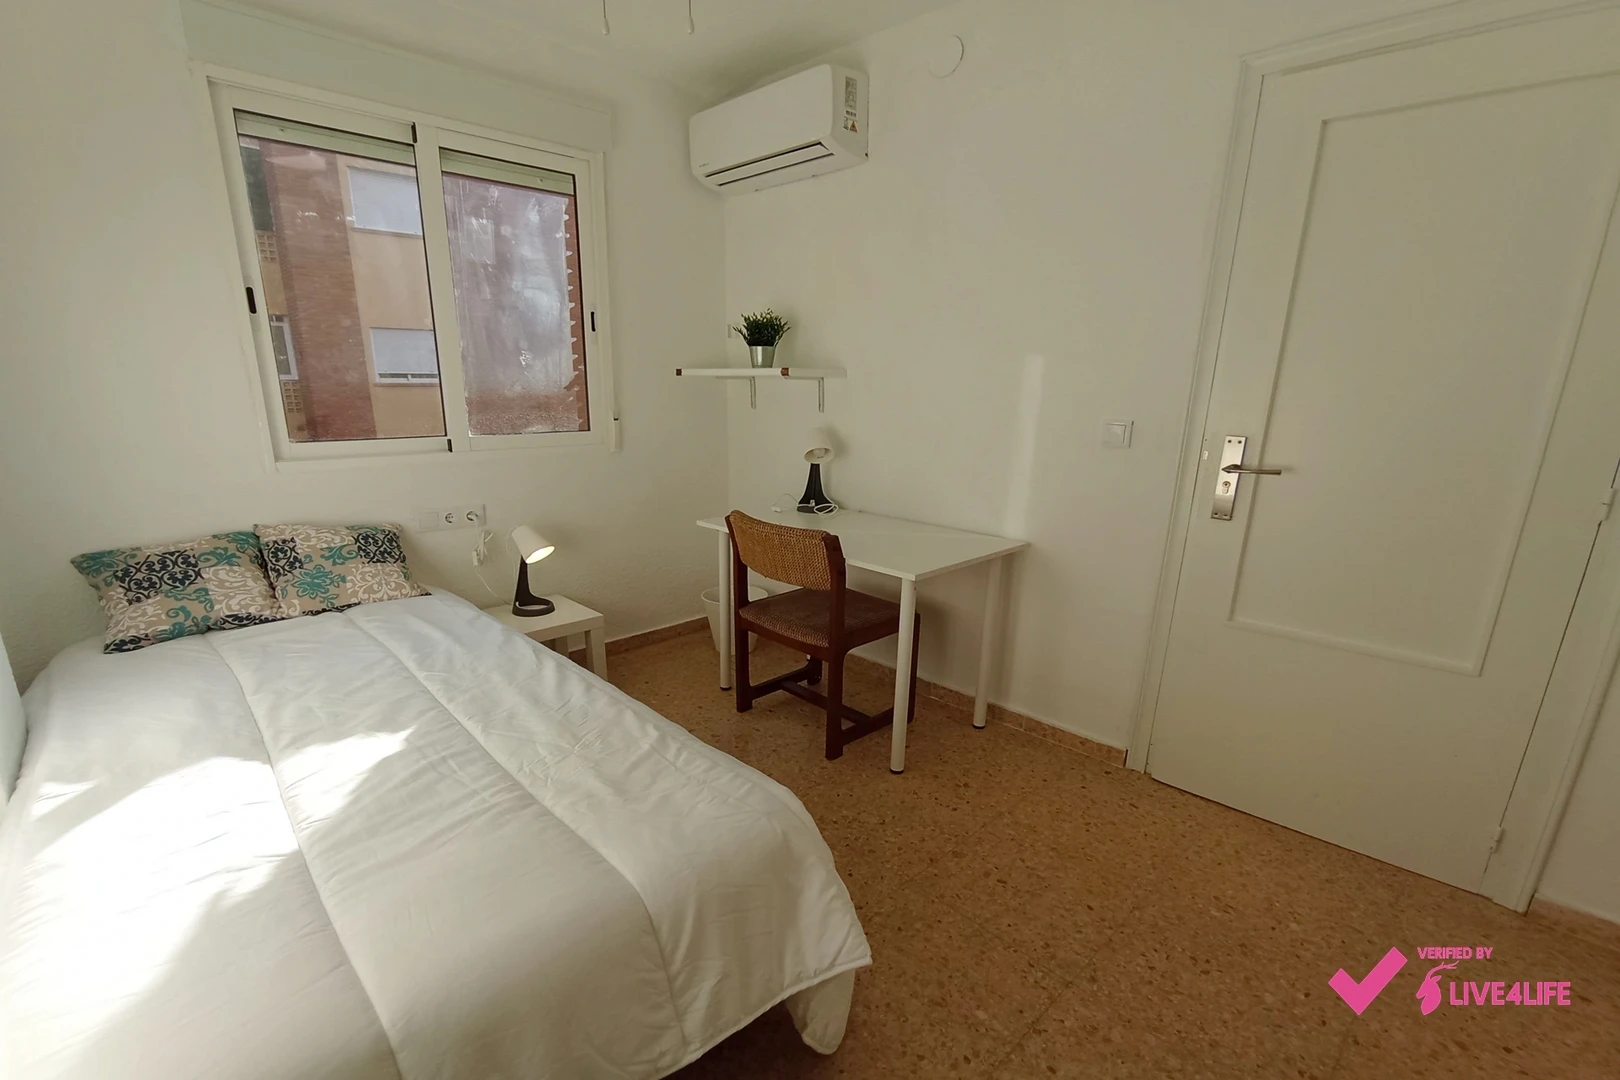 Shared room in 3-bedroom flat burjassot